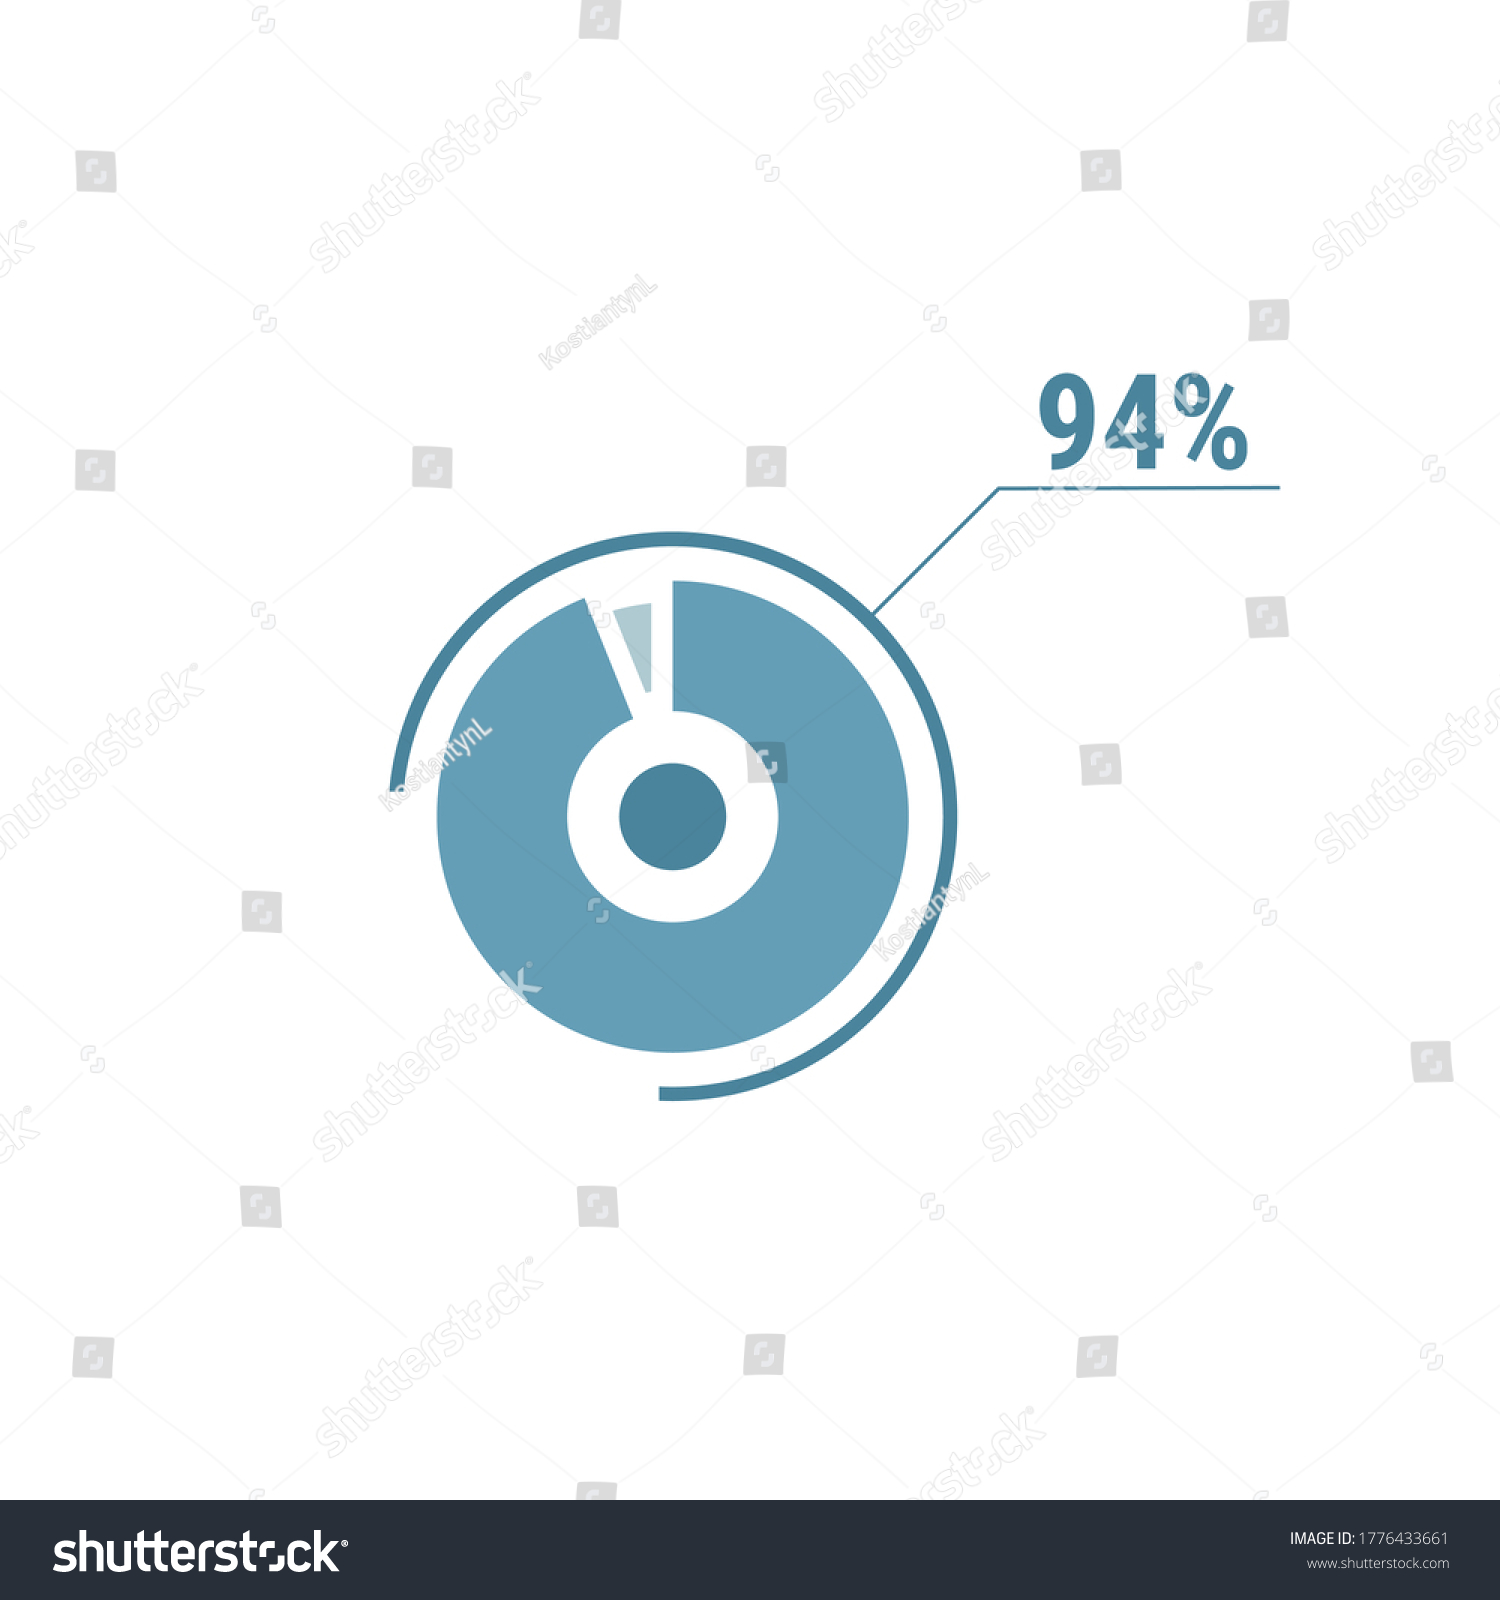 SVG of Ninety four percent chart pie, 94 percent circle diagram, vector design illustration, blue on white background. svg